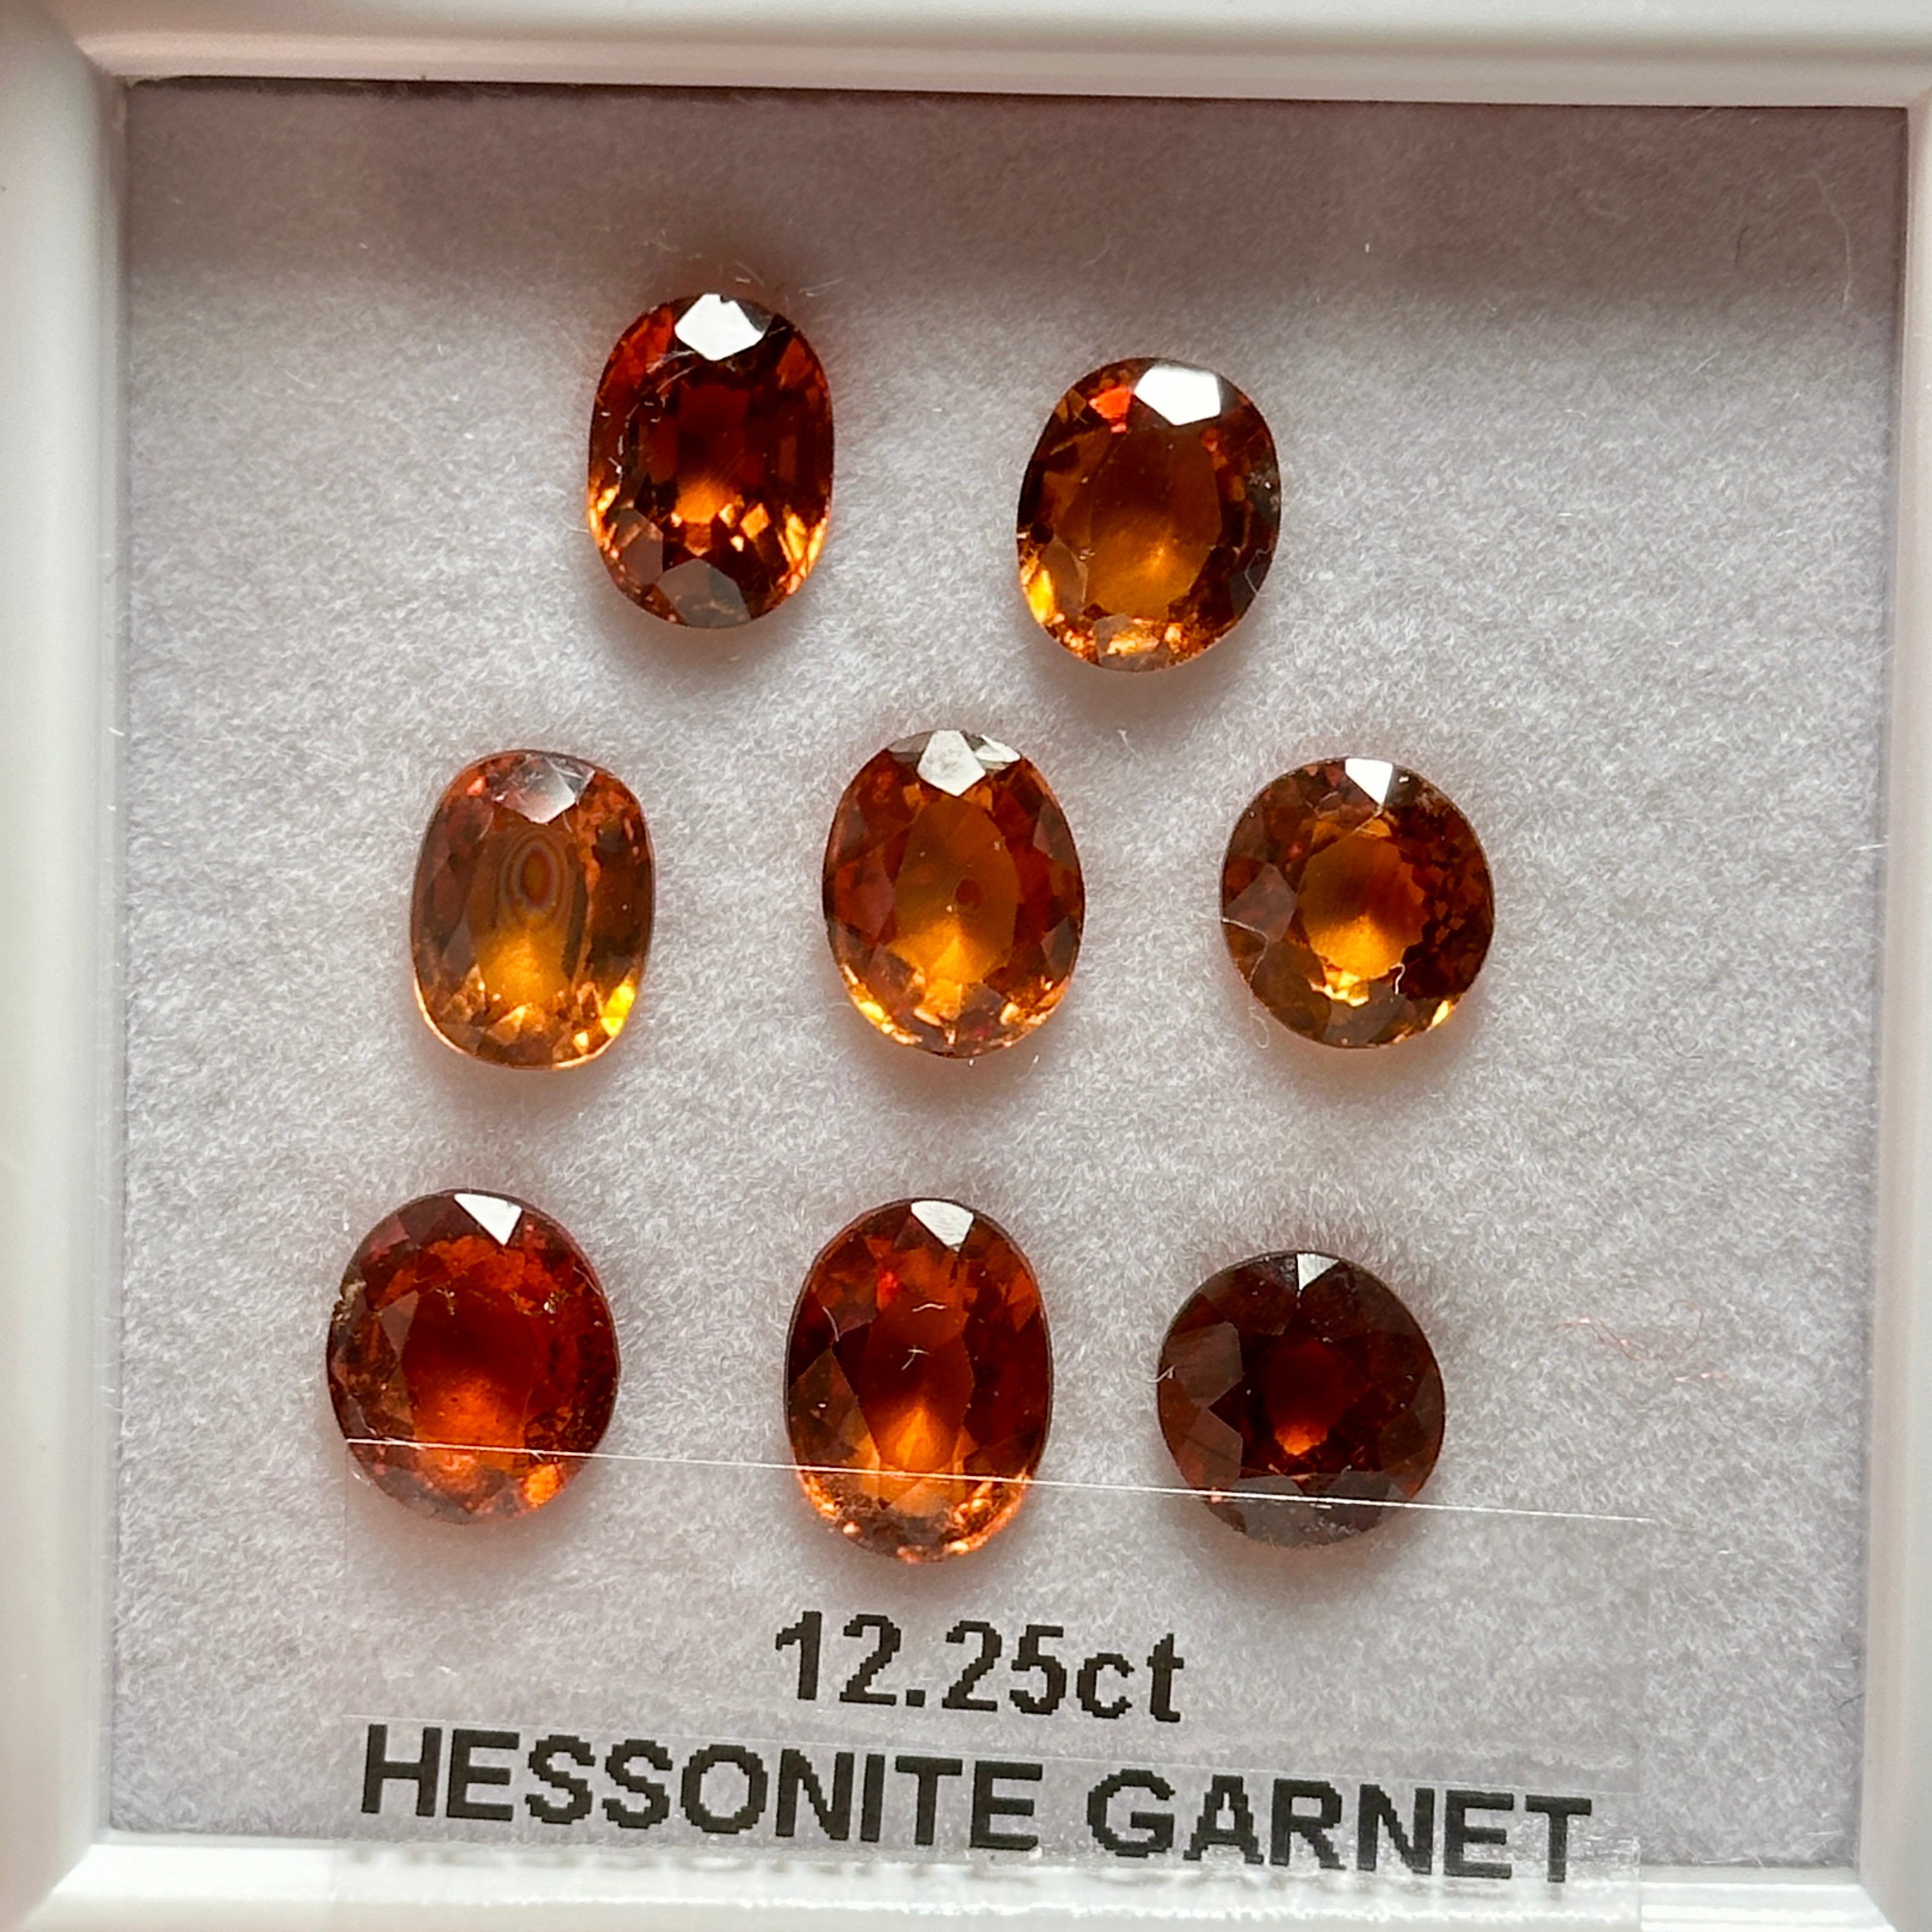 12.25ct Hessonite Garnet Lot, Untreated Unheated, native cut